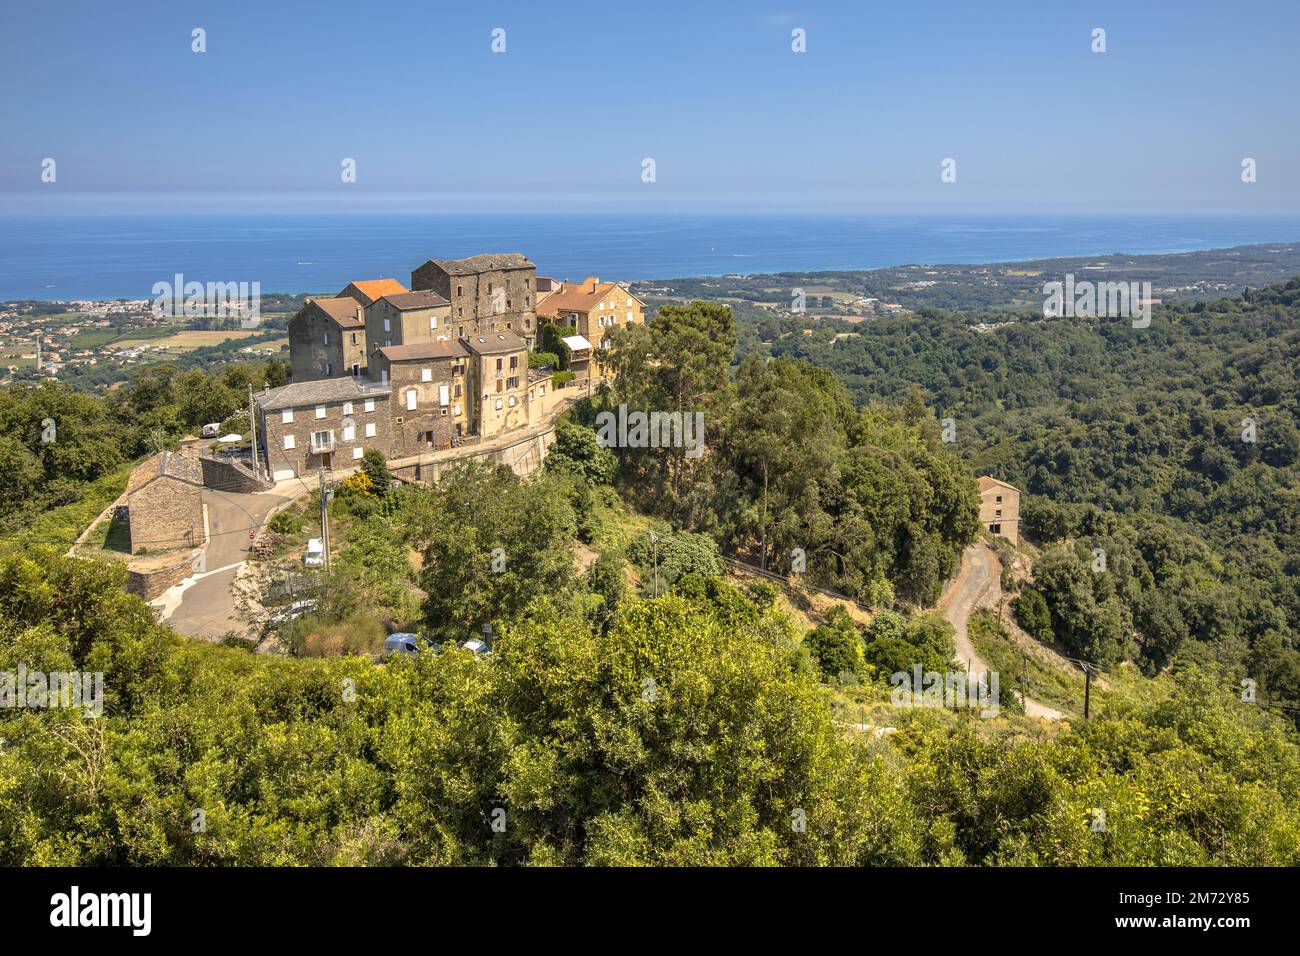 Mountain Village of Coccola near Santa-lucia-di-moriani with view over the mediteranean sea on Corsica, France Stock Photo